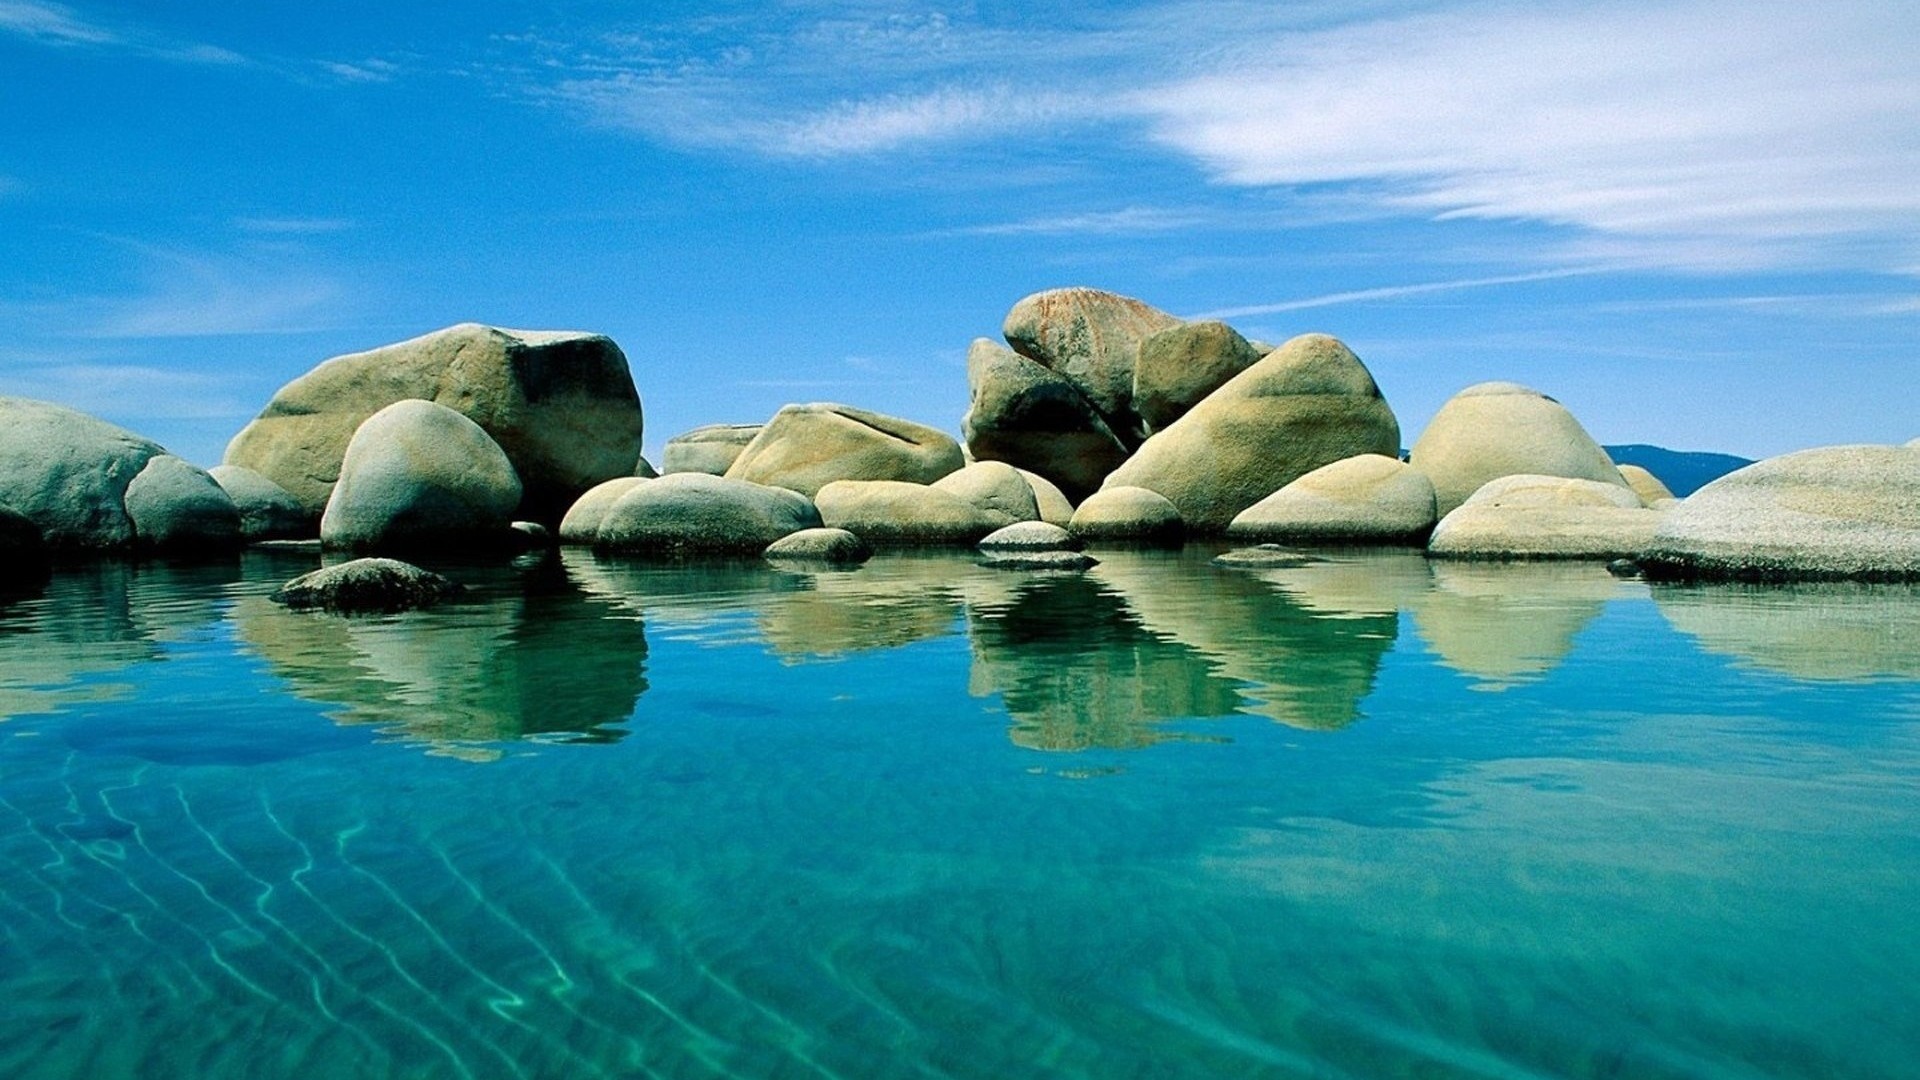 1920x1080 Download now full hd wallpaper adriatic sea stone clear water blue croatia  ...